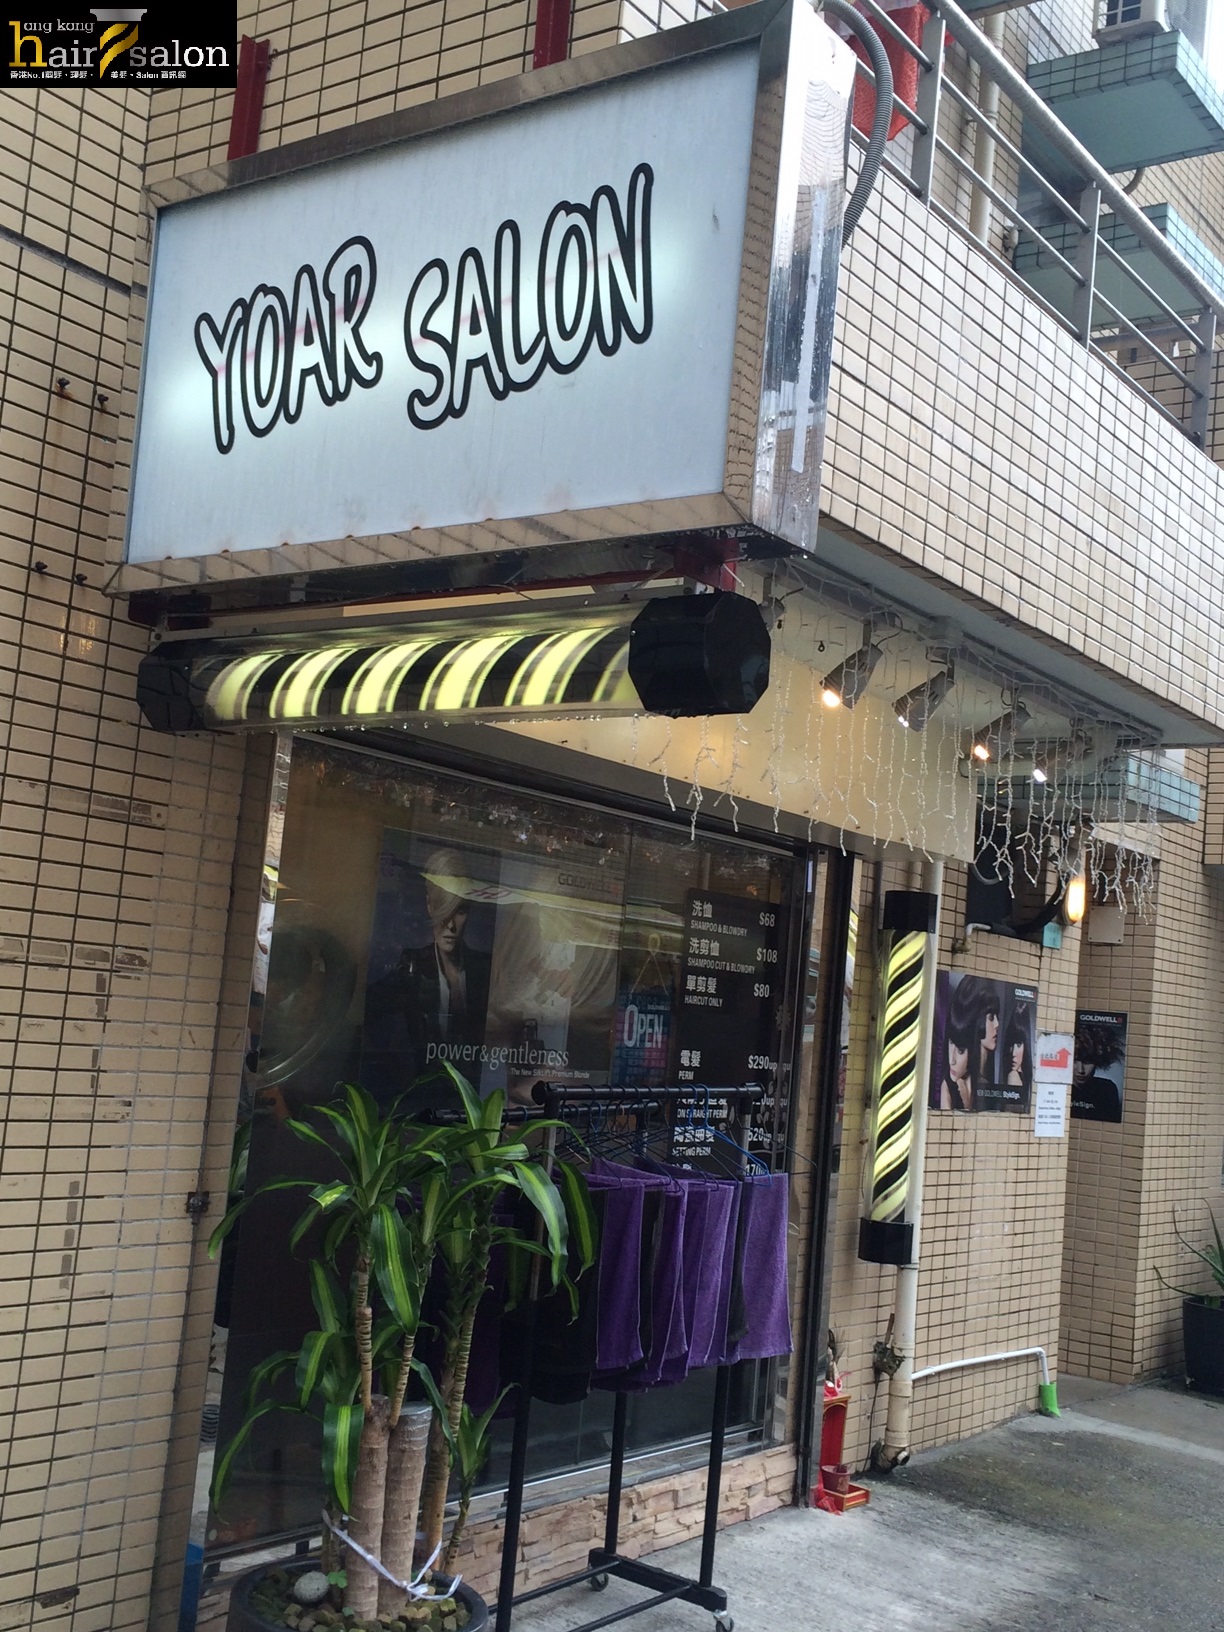 Haircut: Yoar Salon (馬灣)